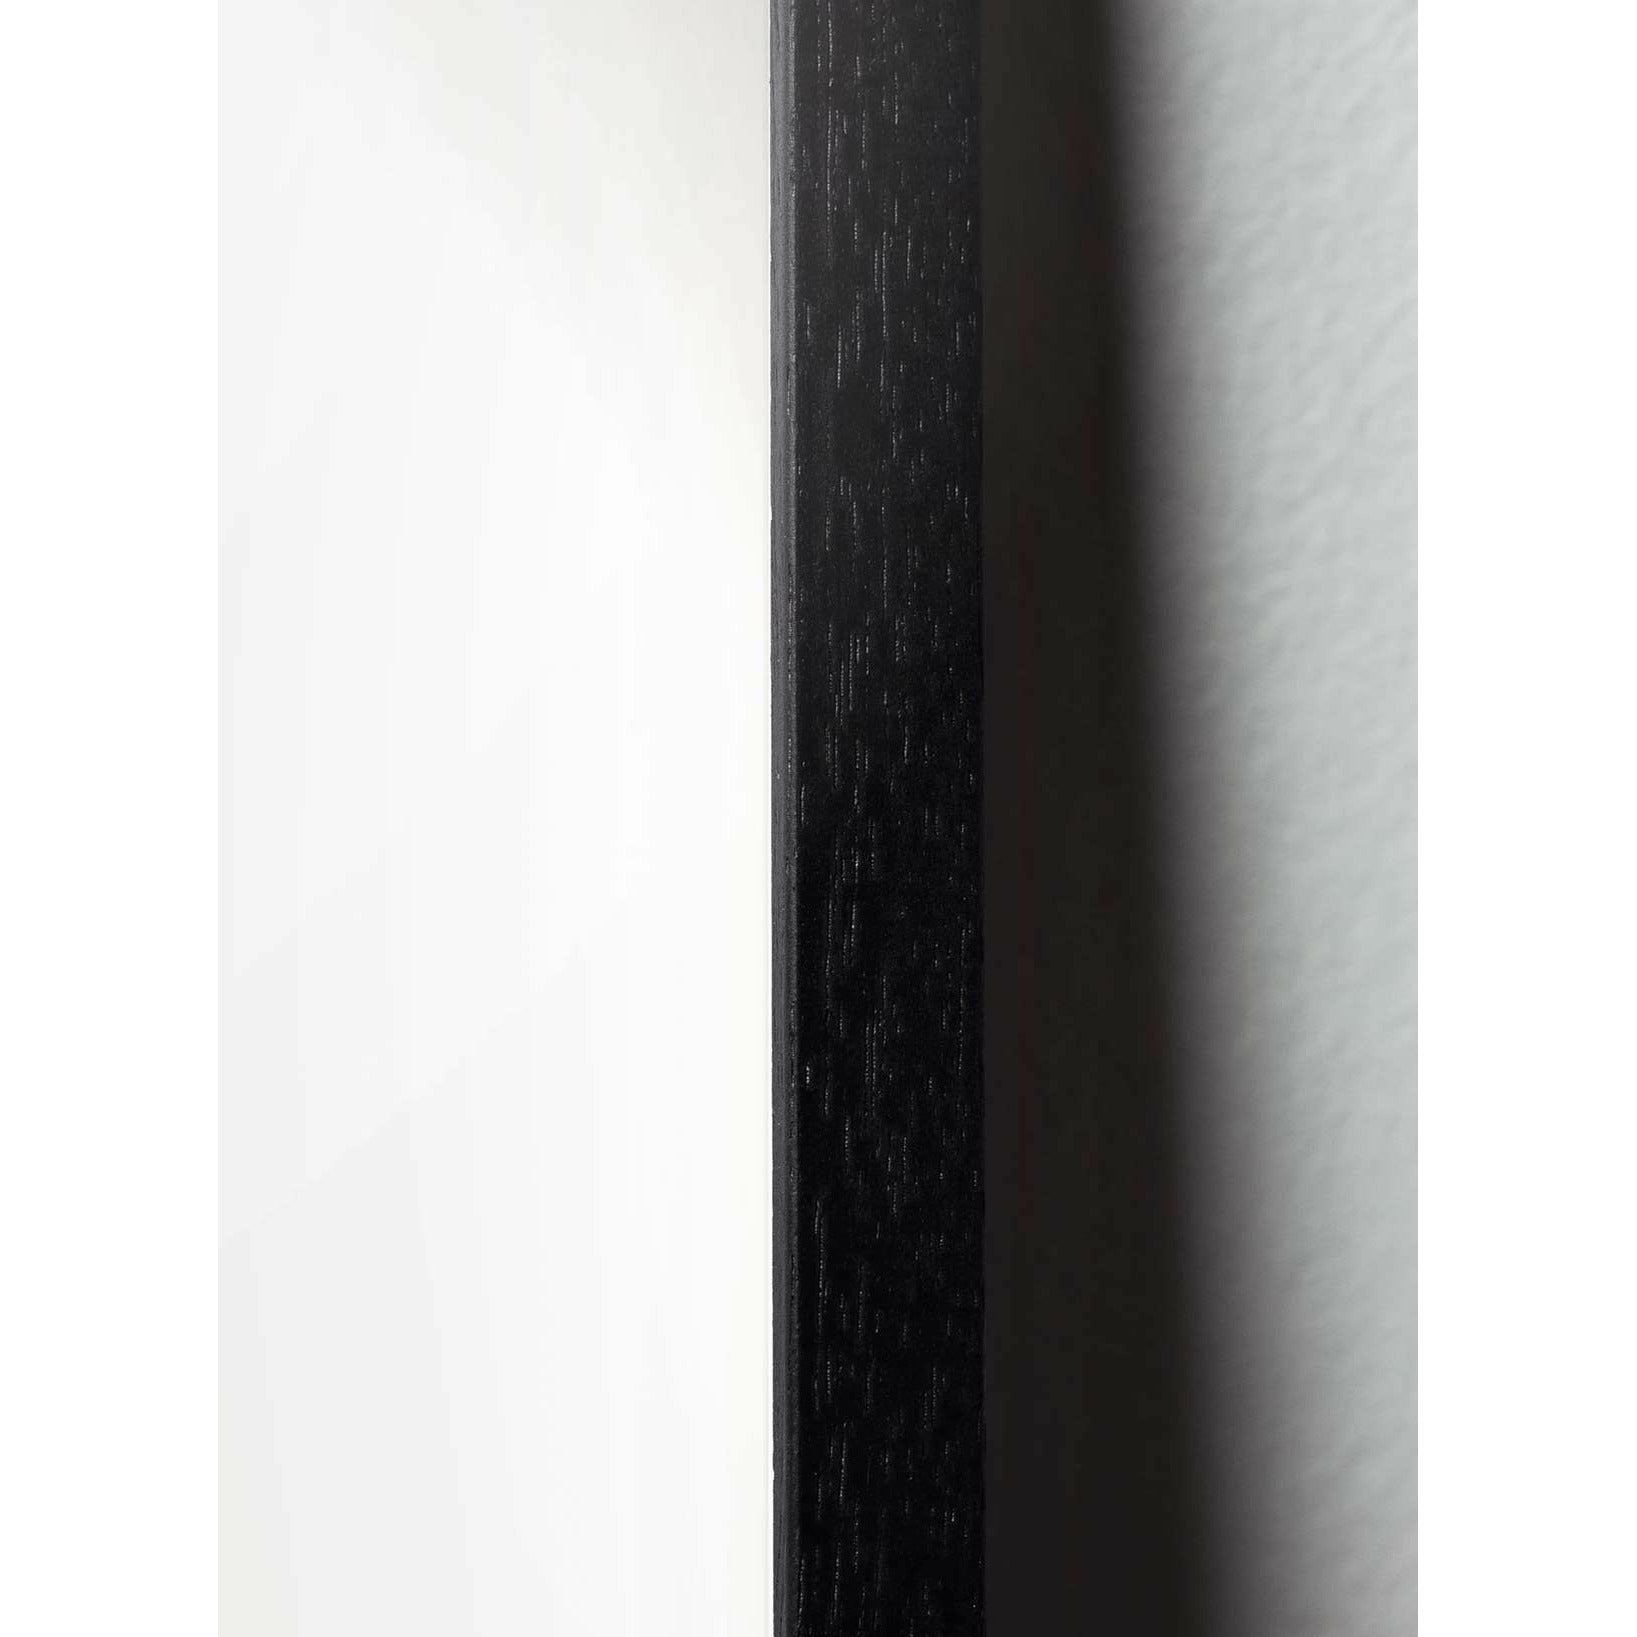 Brainchild Teddybeer klassieke poster, frame in zwart gelakt hout 70x100 cm, zandkleurige achtergrond